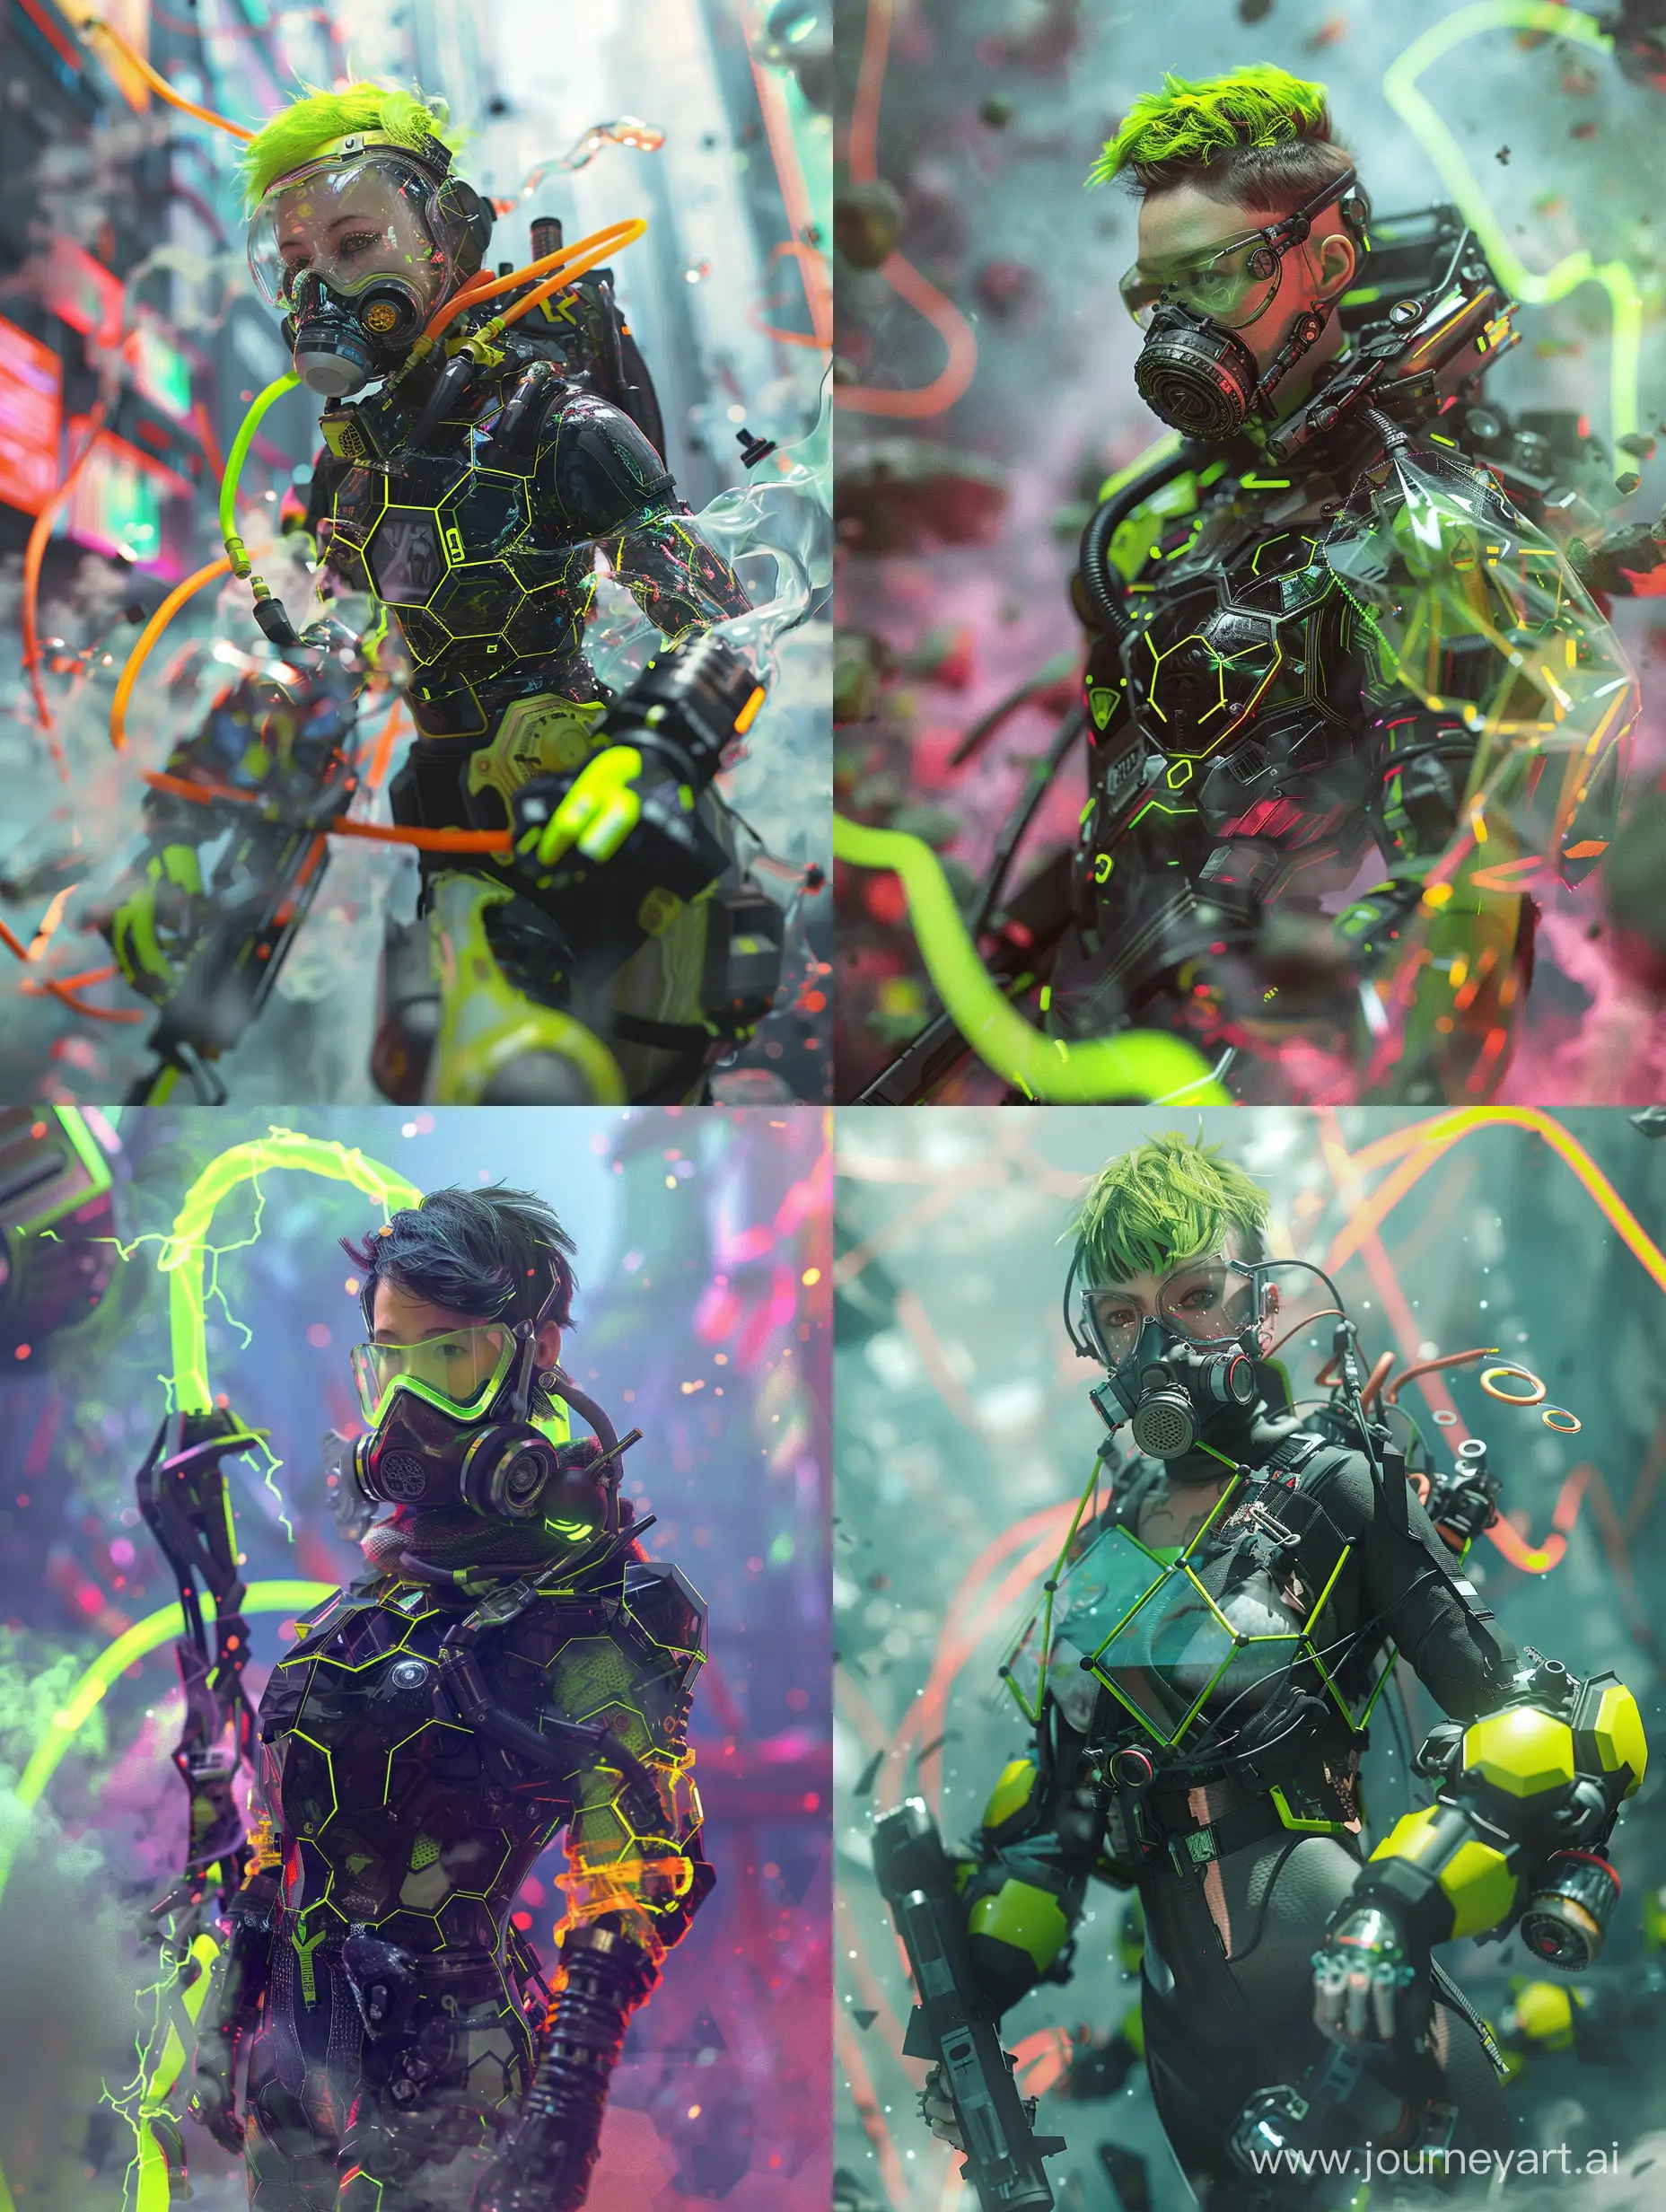 Cyberpunk-Female-with-Hexagonal-Neon-Armor-in-Vibrant-Cityscape